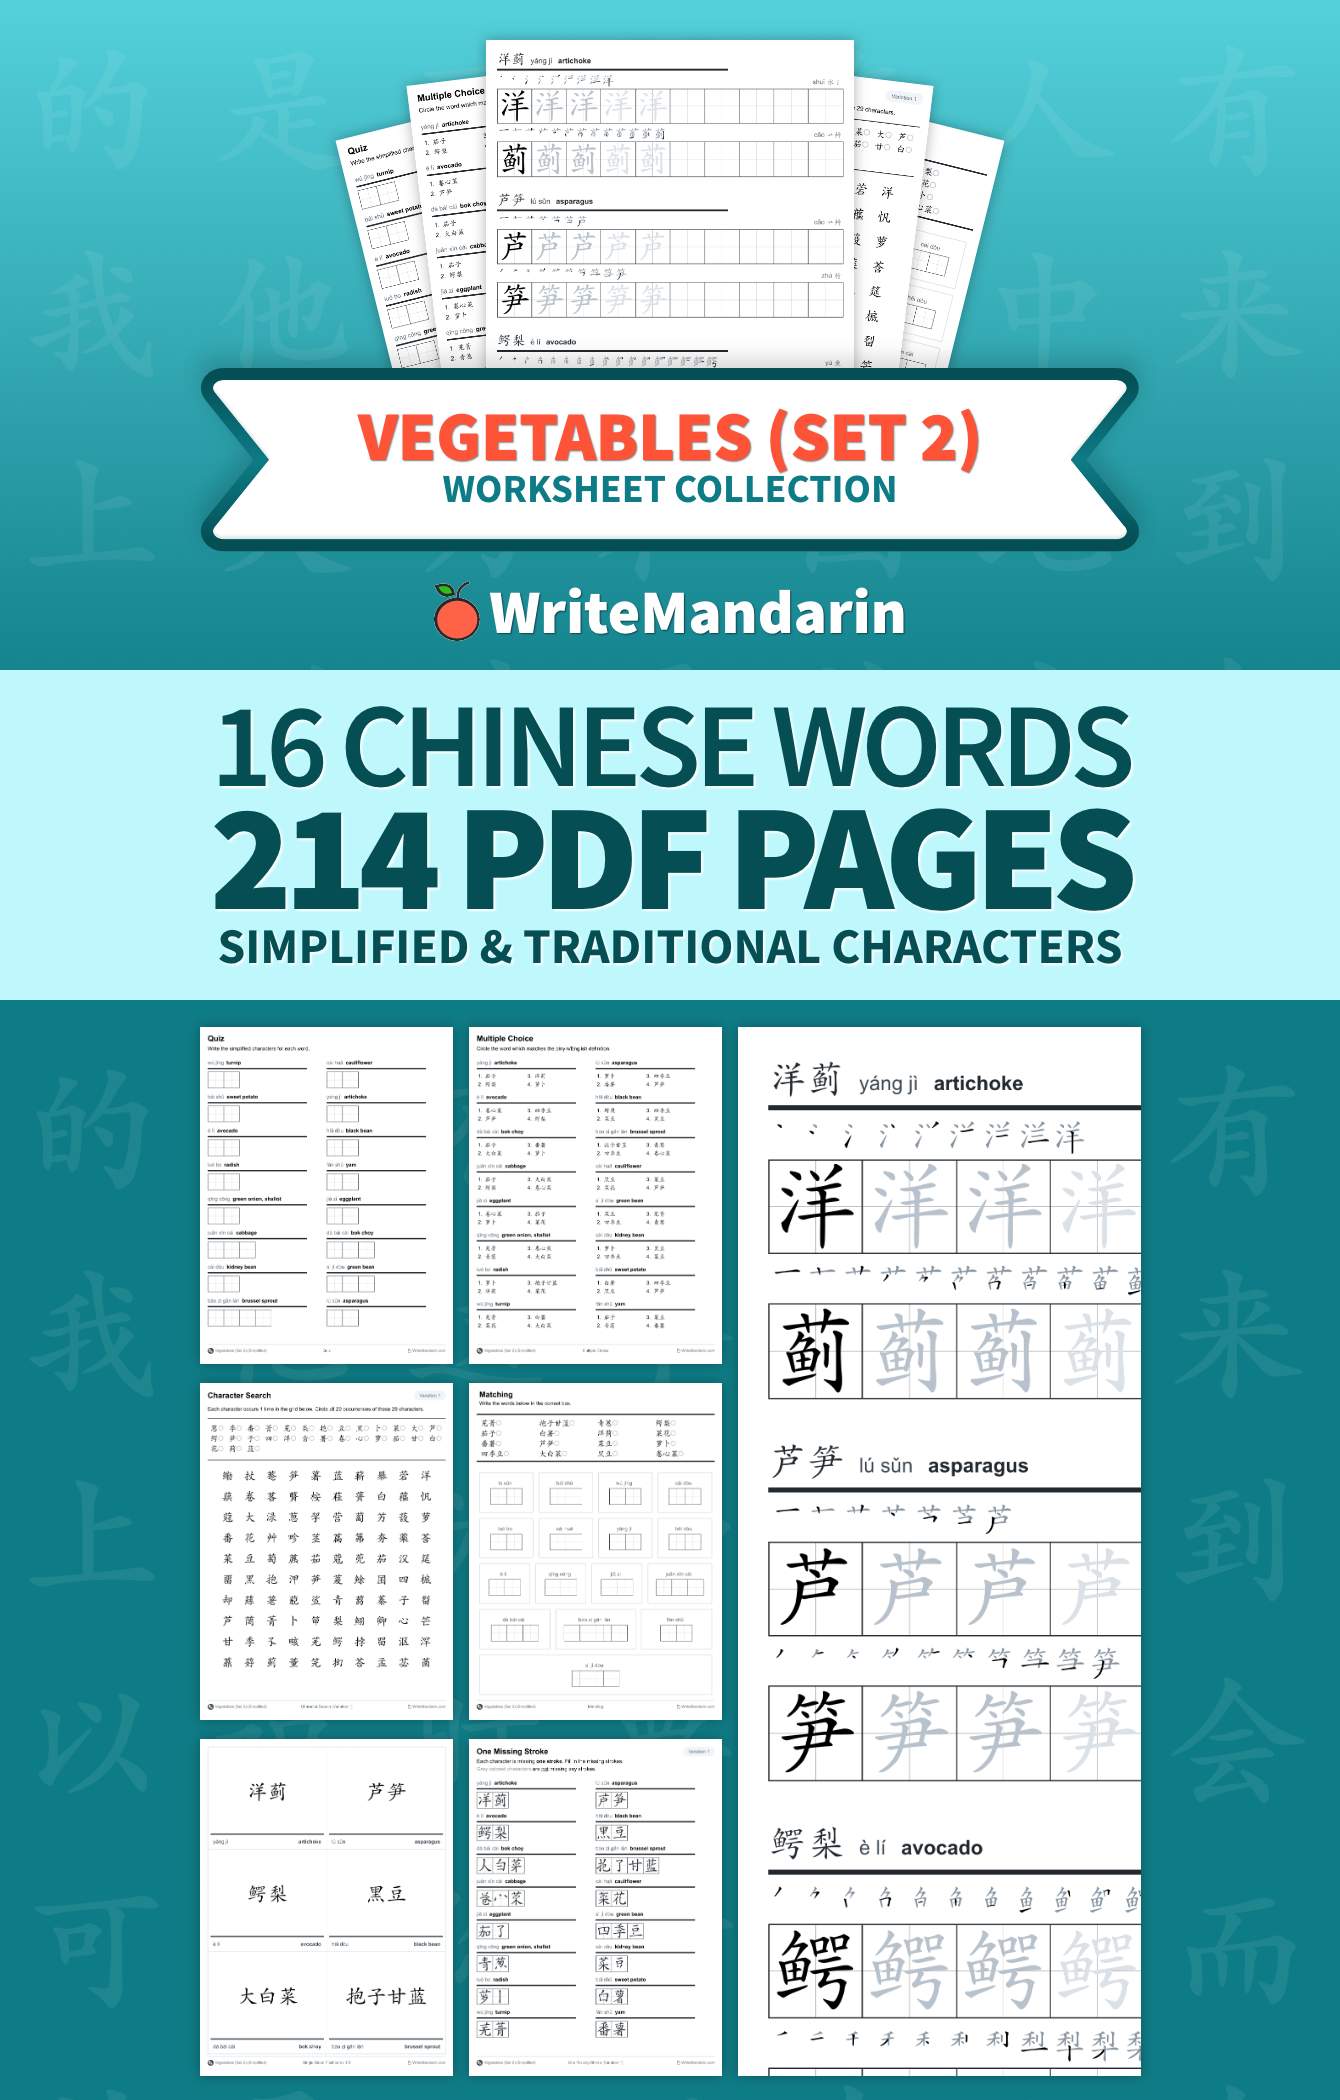 Preview image of Vegetables (Set 2) worksheet collection